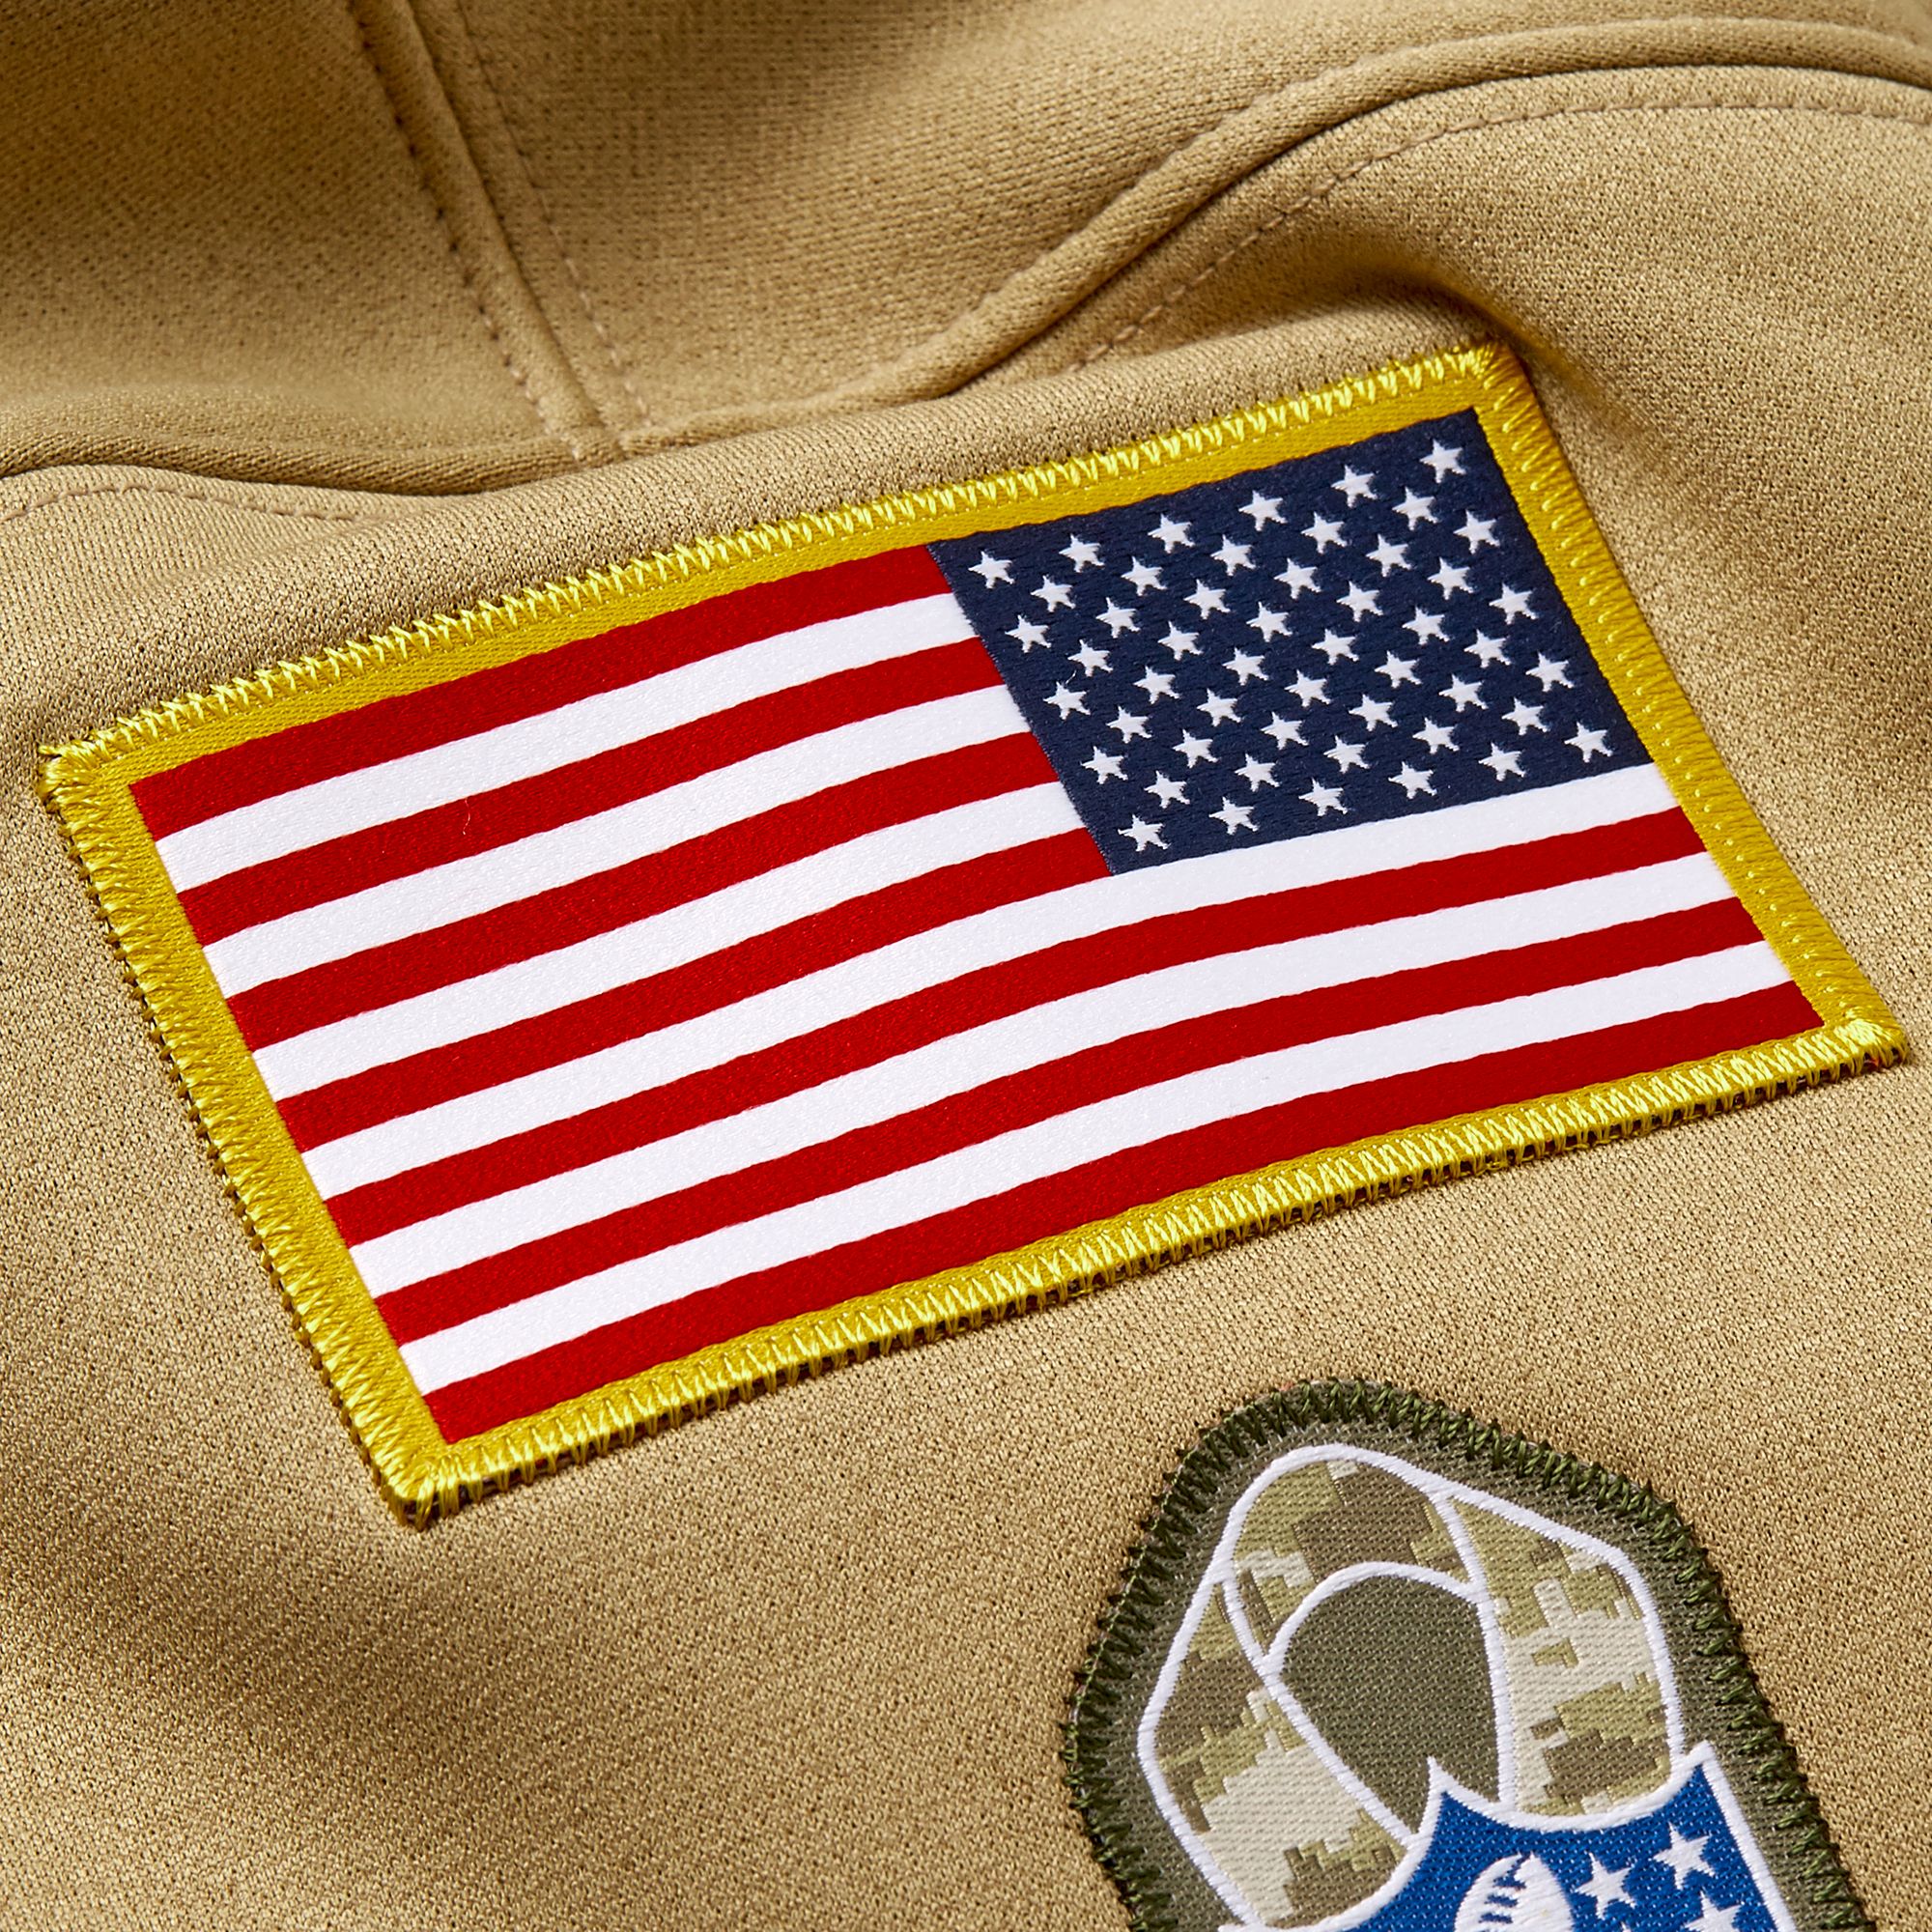 carolina panthers military hoodie